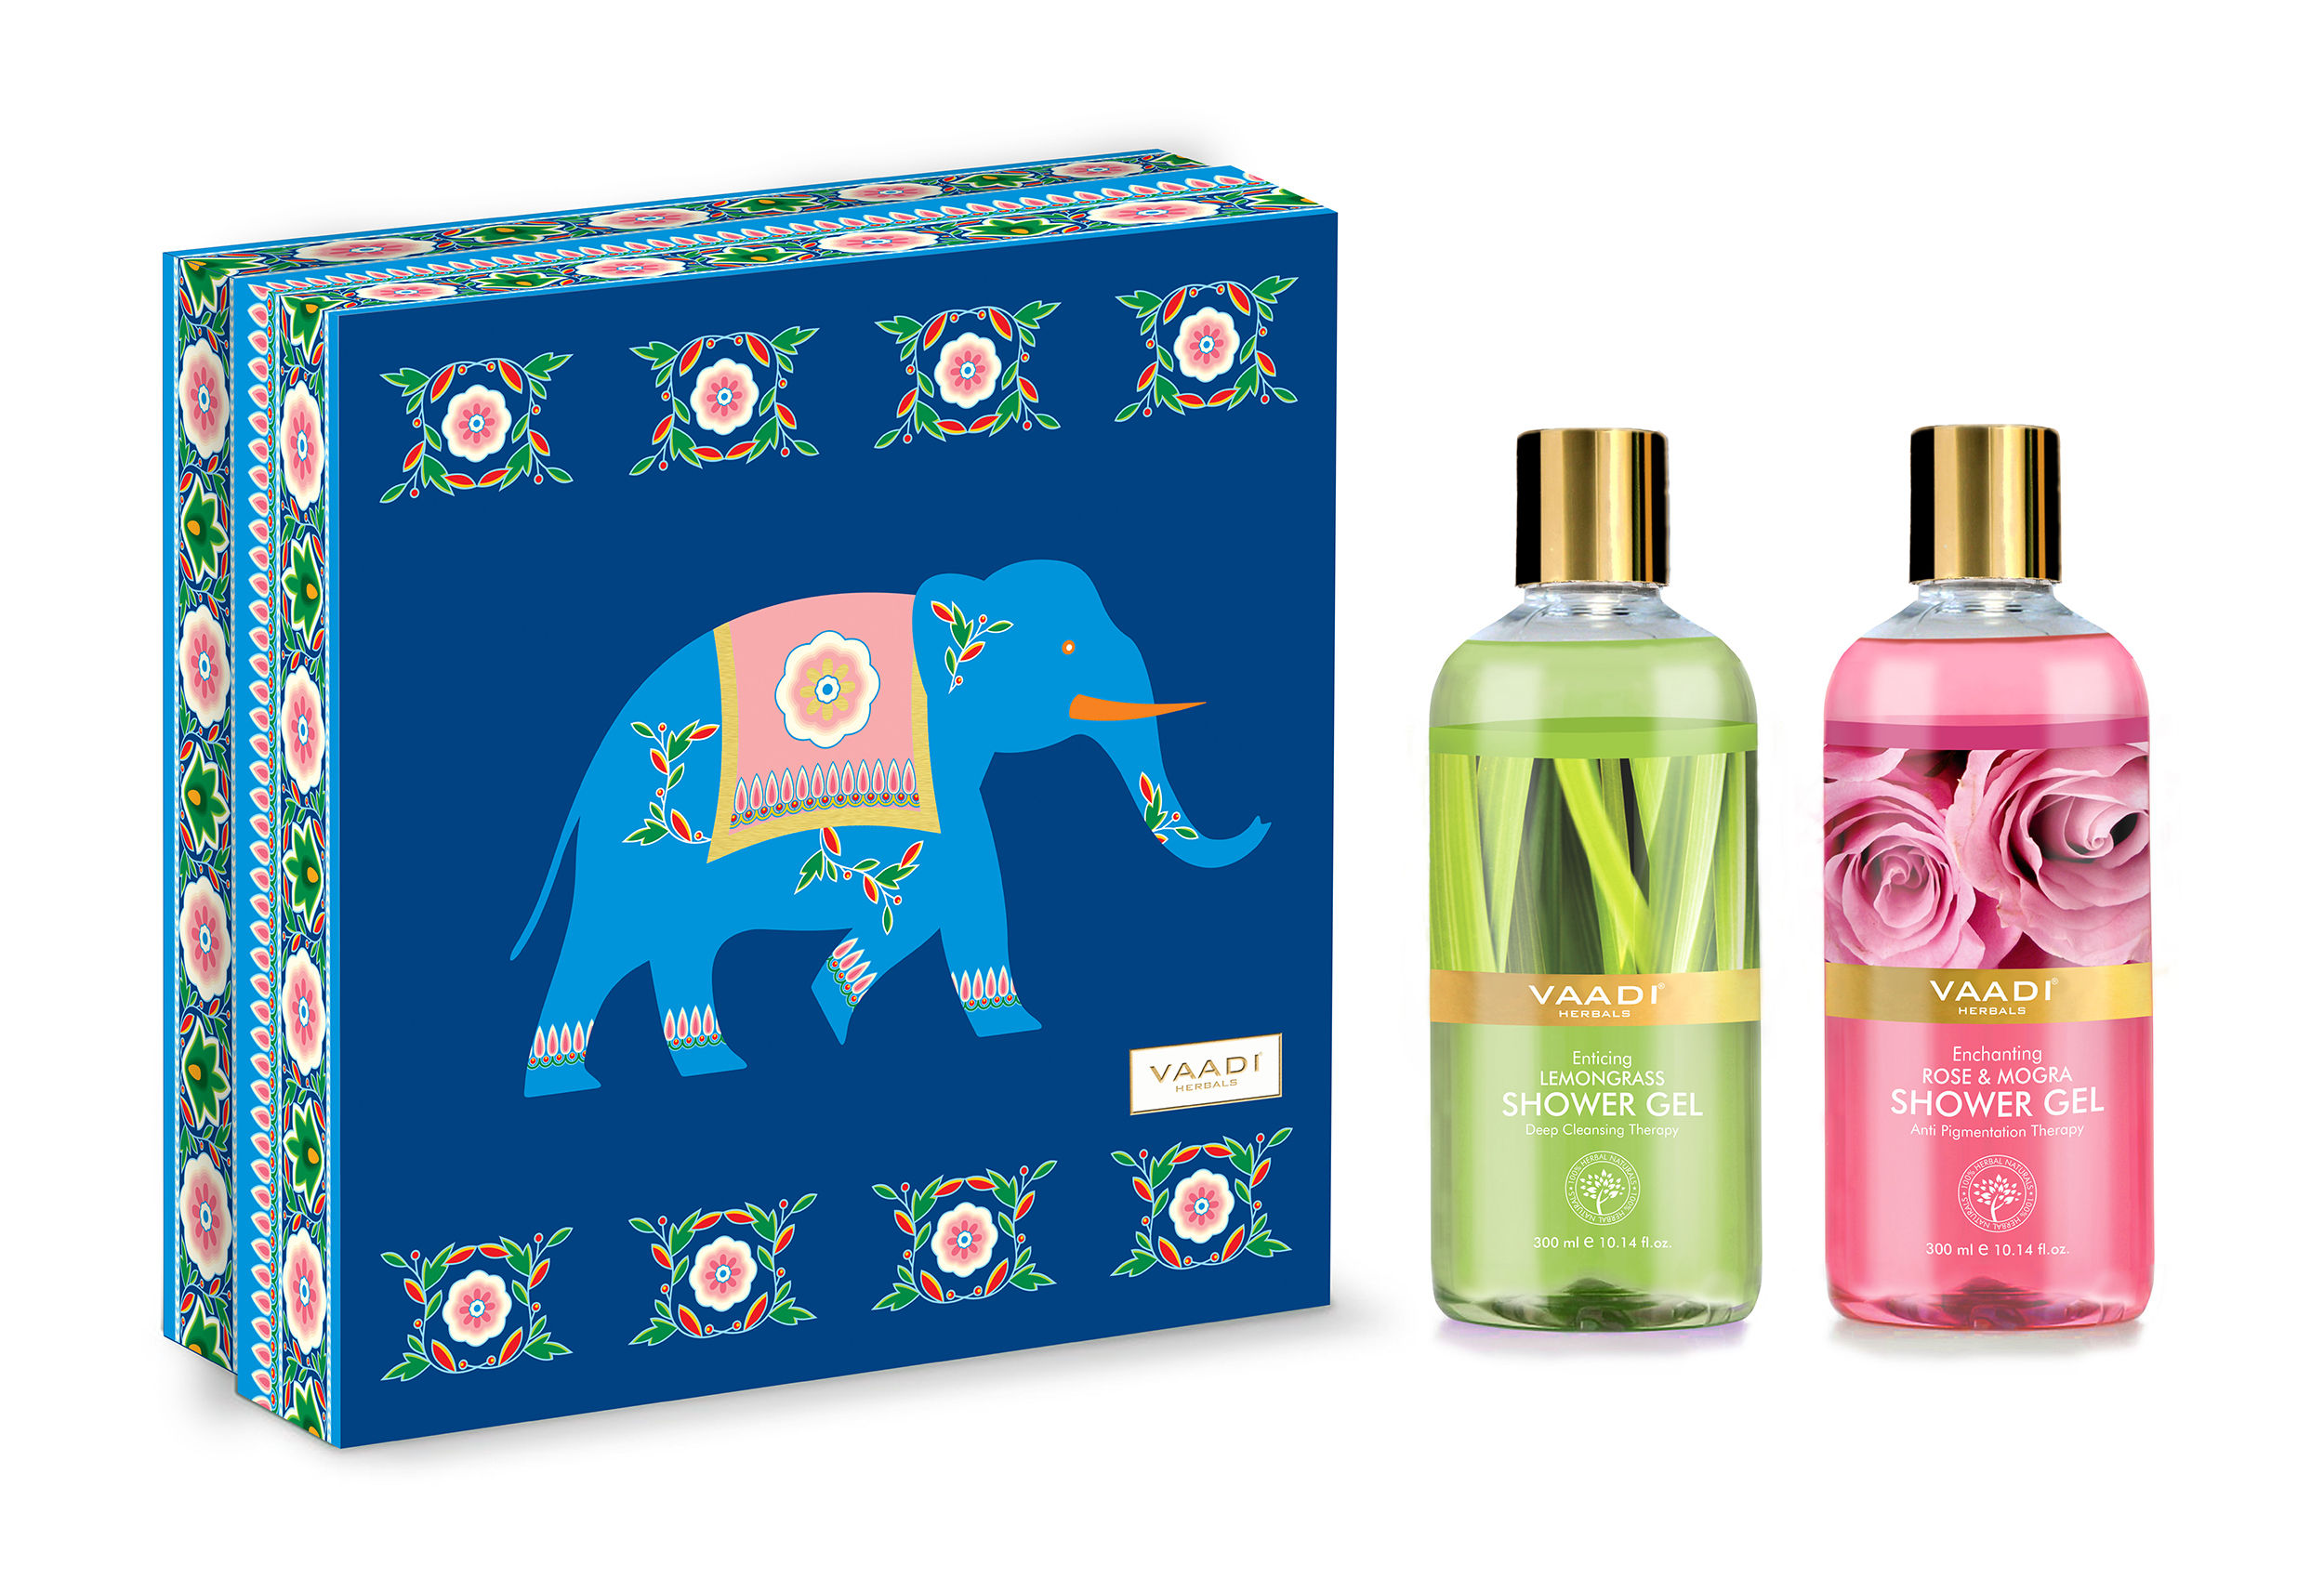 Vaadi Herbals Enduring Fragrance Shower Gel Gift Box